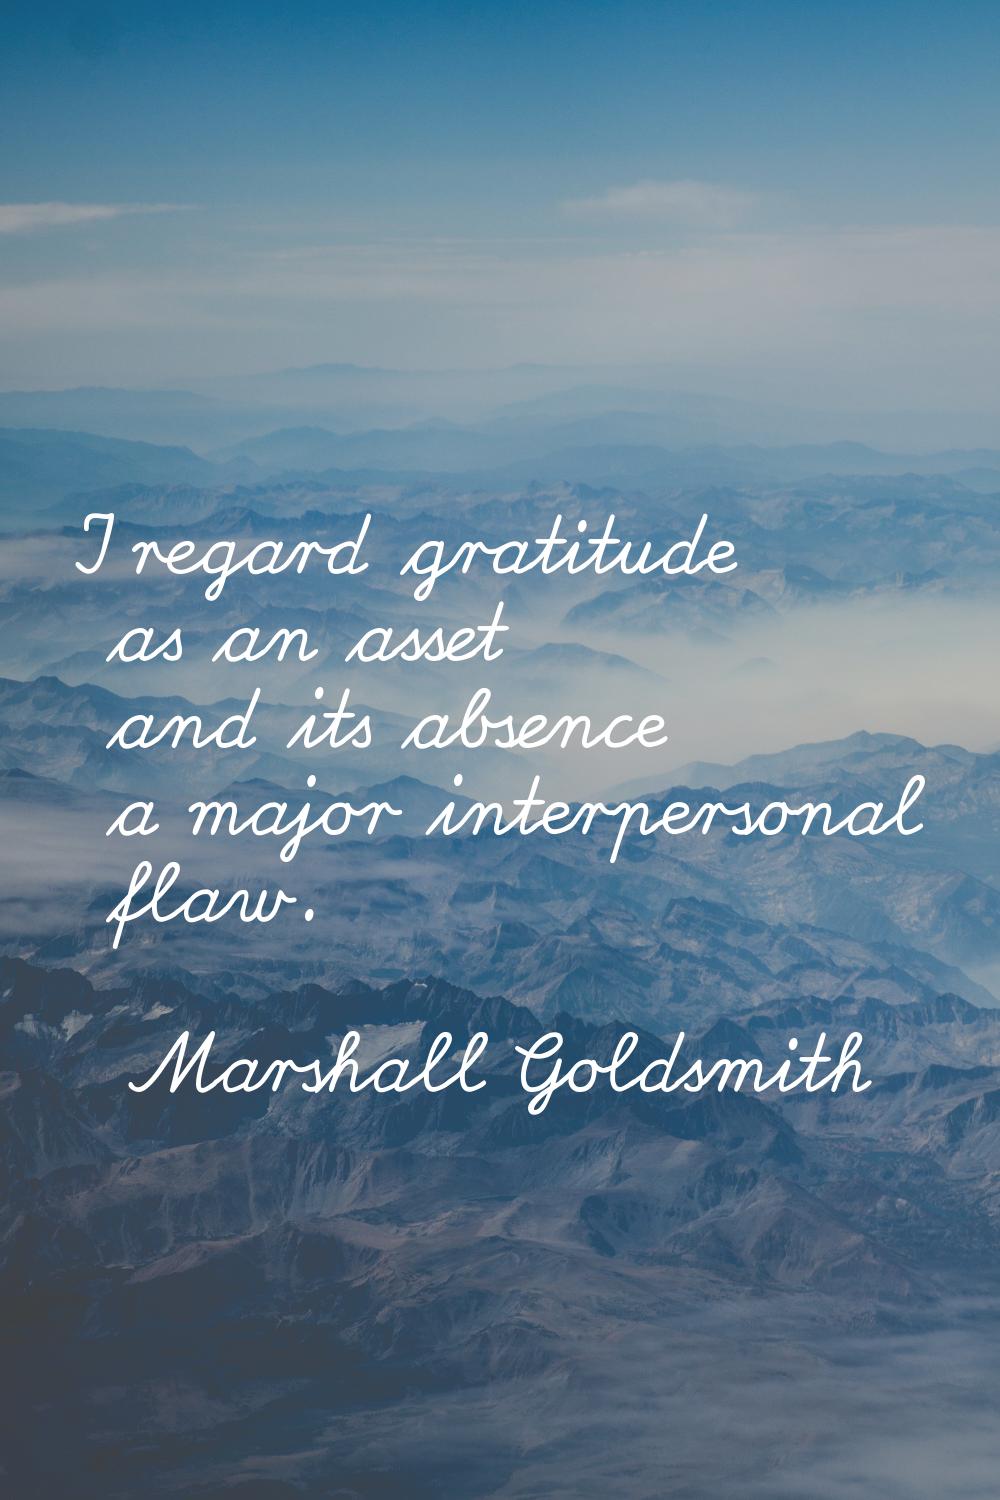 I regard gratitude as an asset and its absence a major interpersonal flaw.